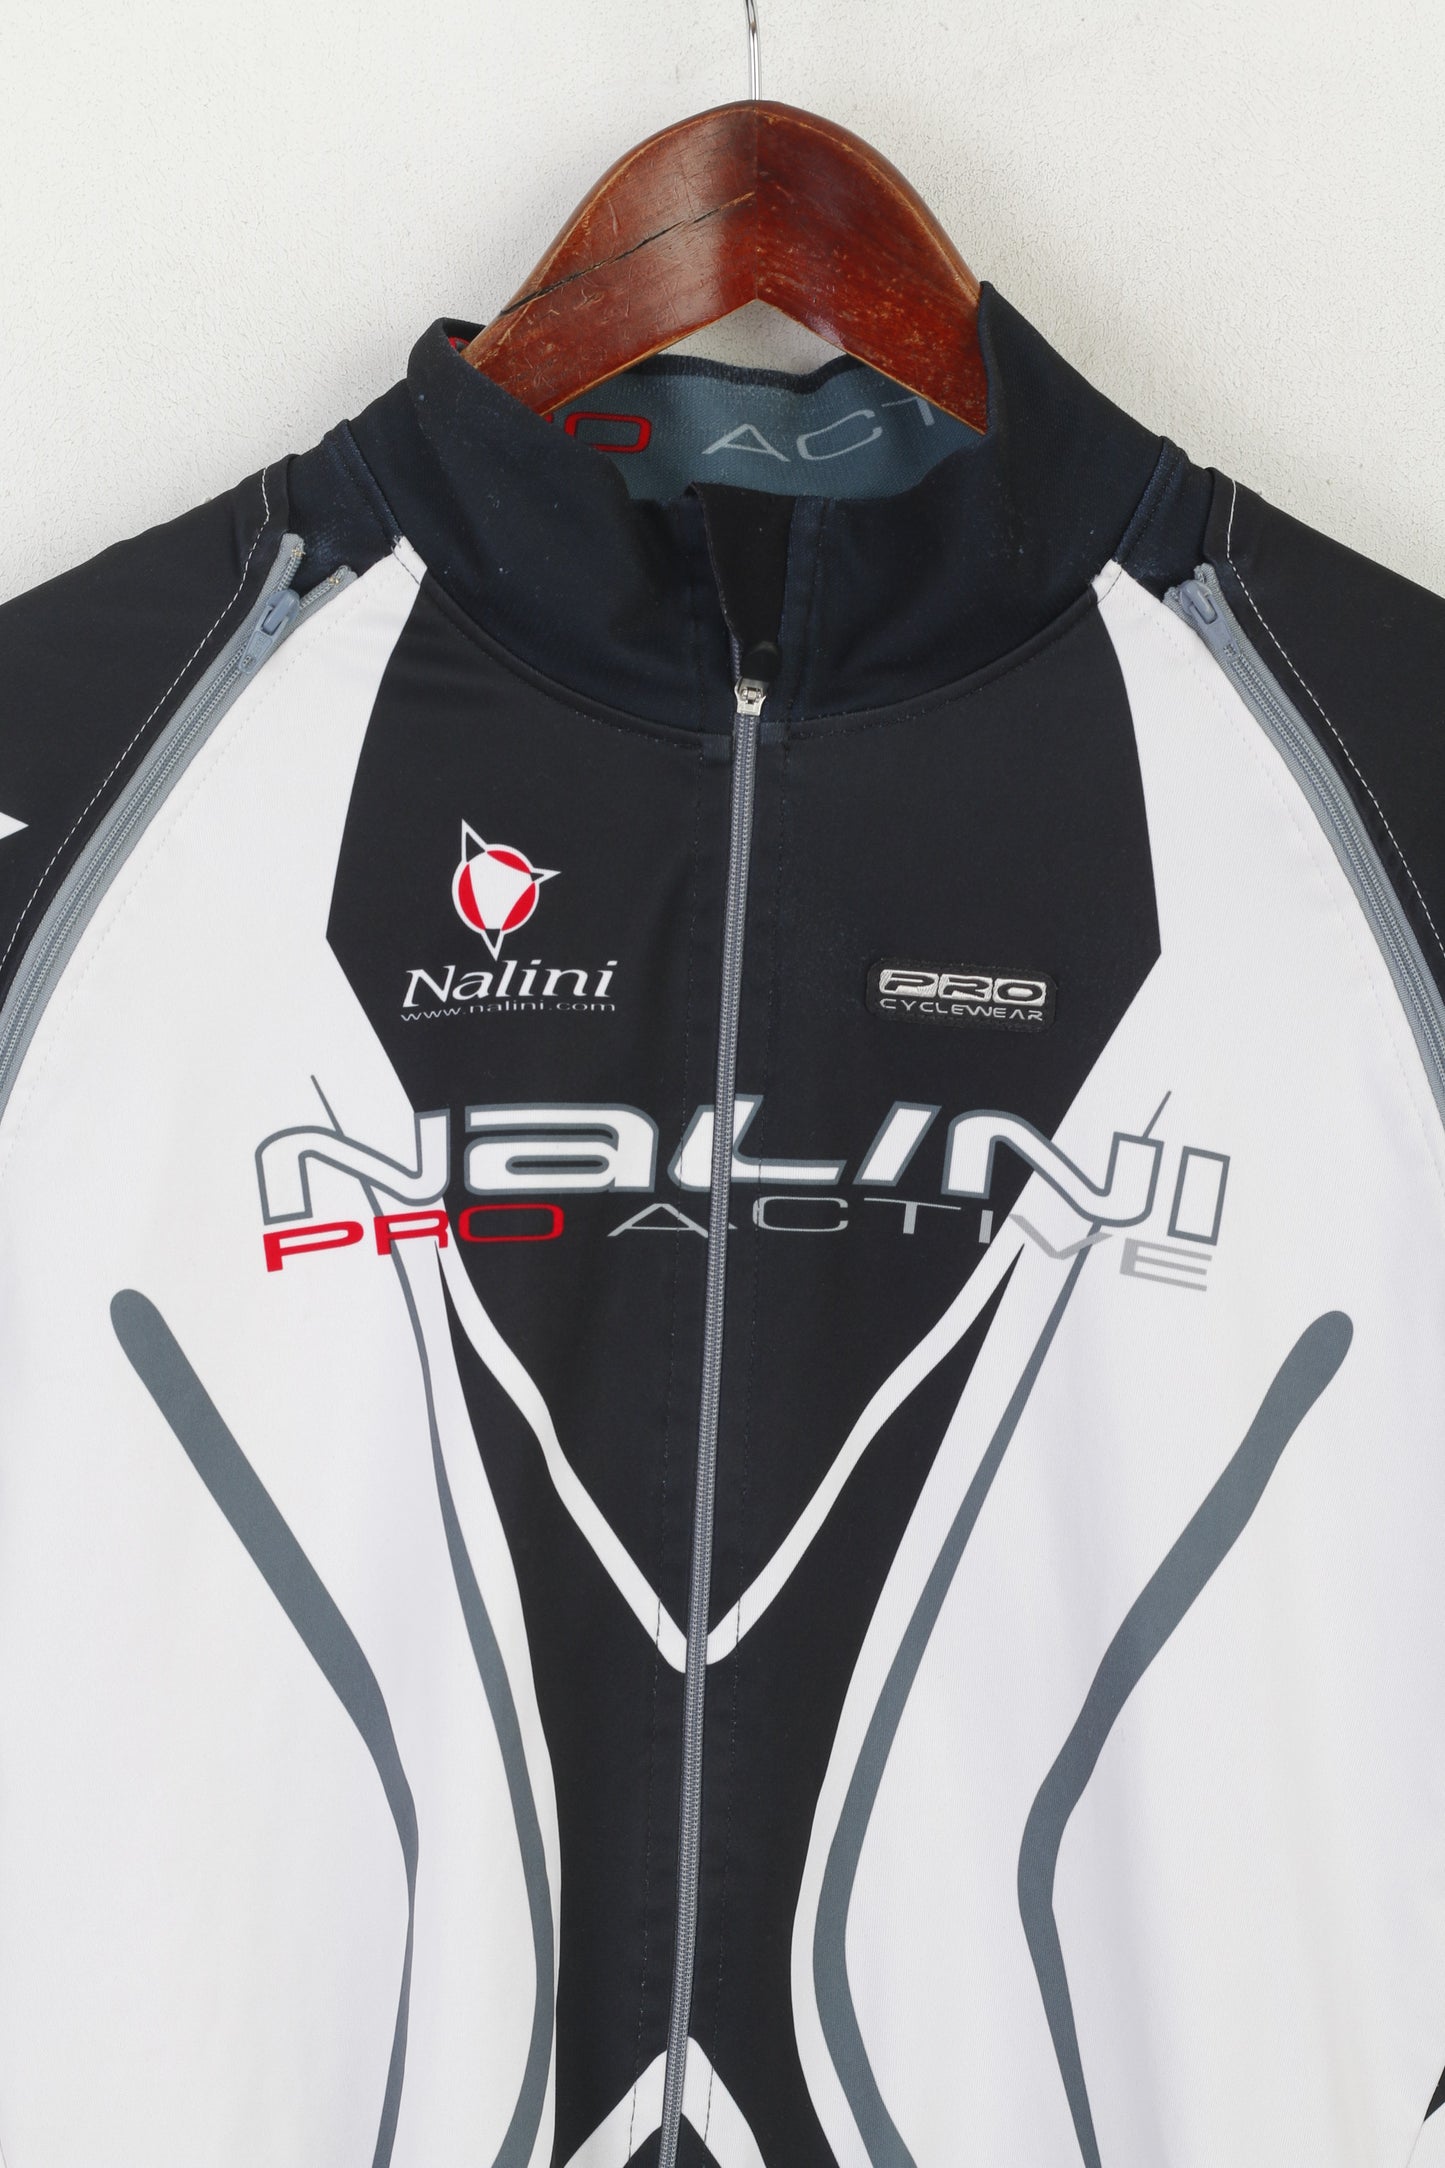 Nalini Men L Cycling Shirt White Removable Sleeve Italy Full Zip Bike Pro Wear